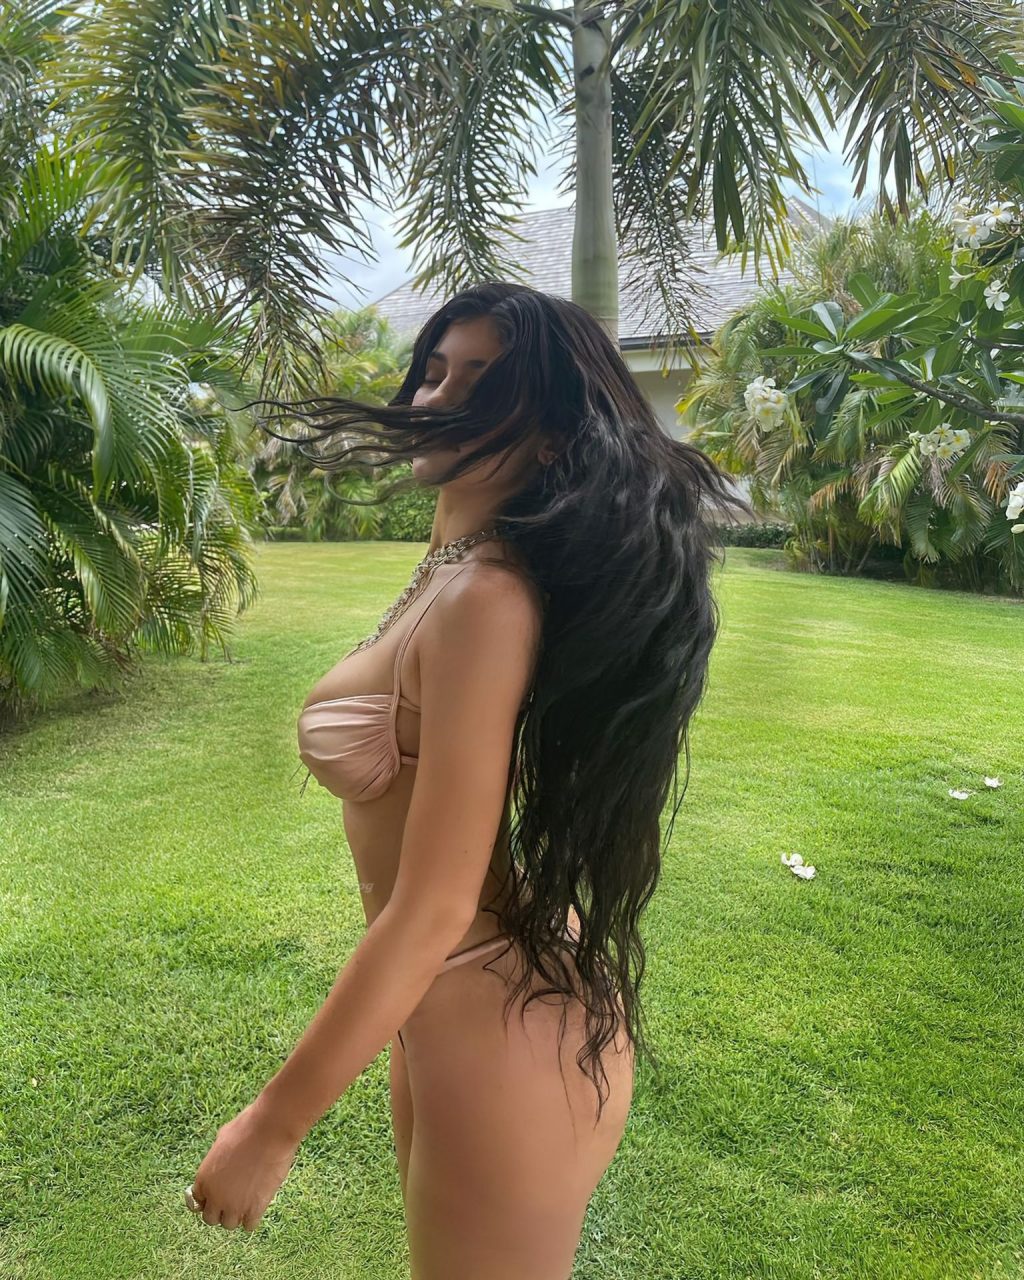 Kylie Jenner Looks Hot (5 New Photos)